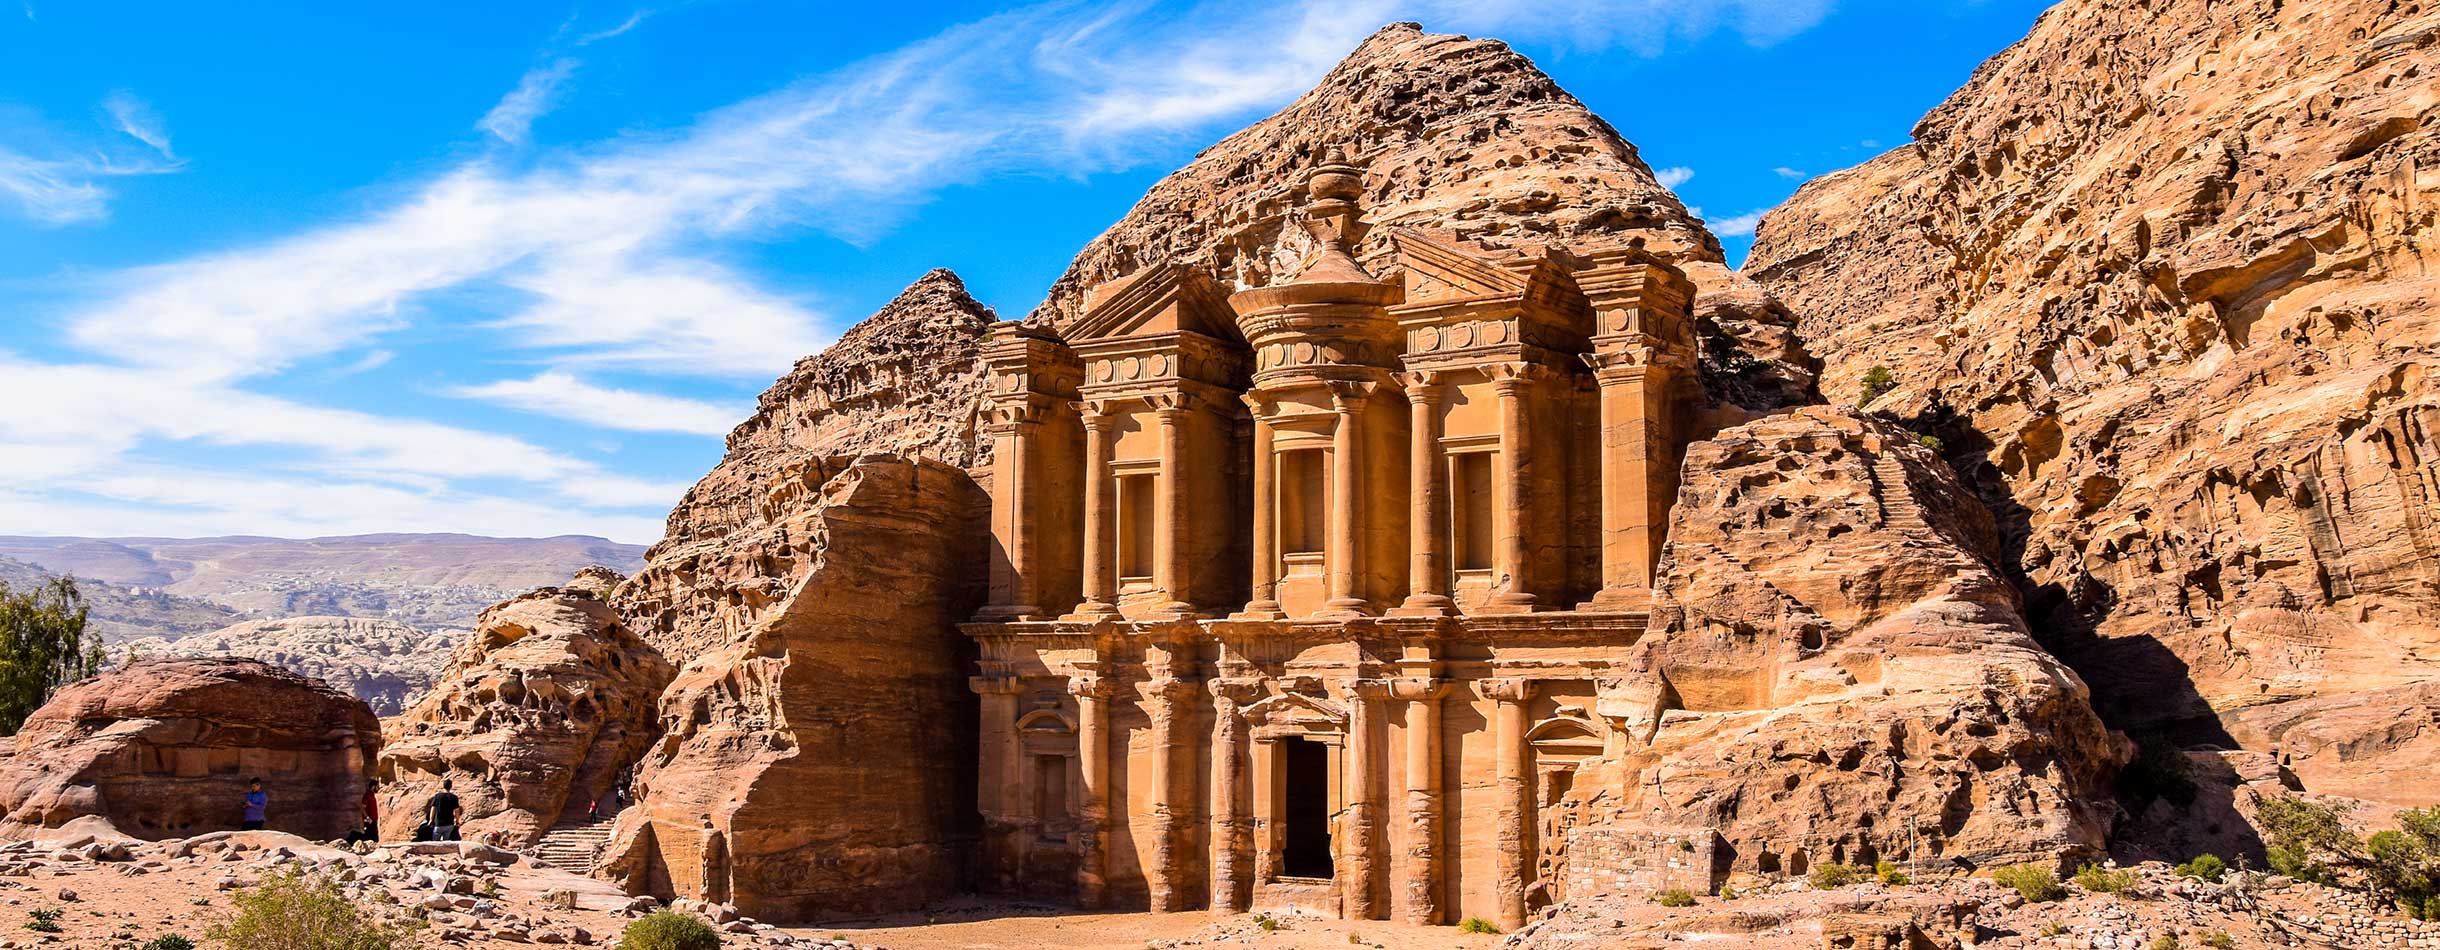 Lost city of Petra, Aqaba